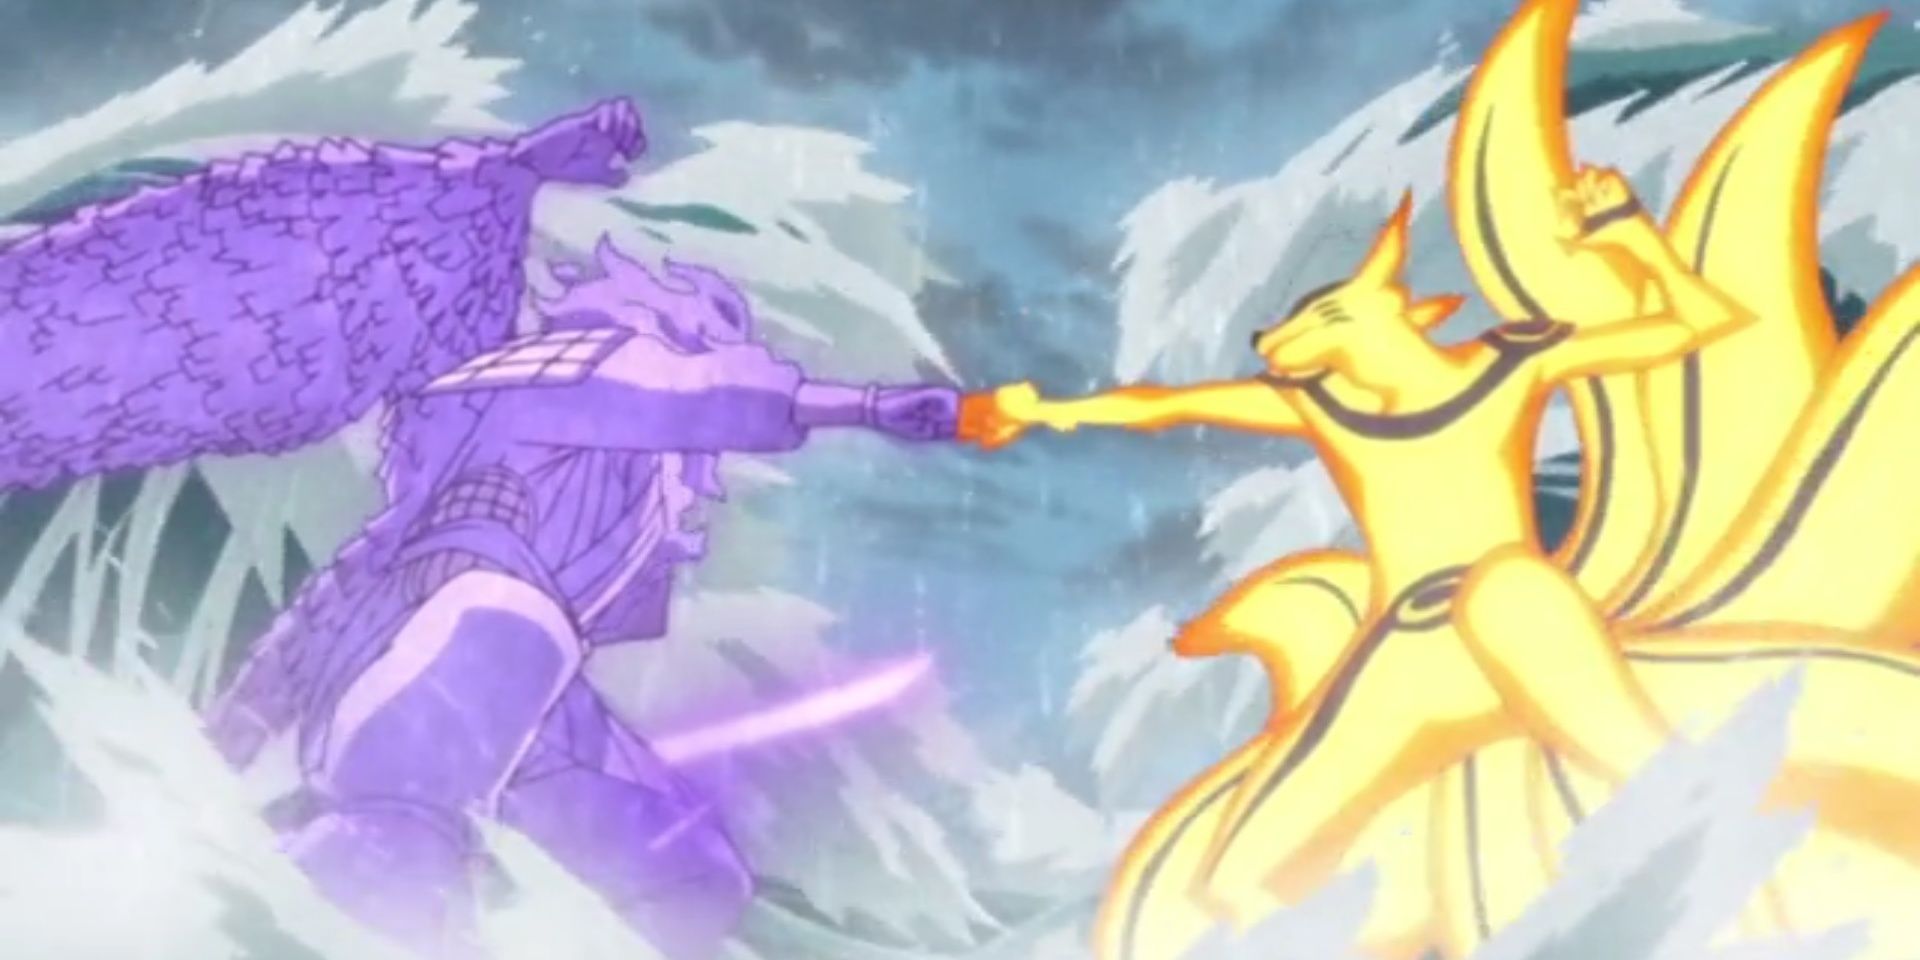 Naruto Tailed Beast Kurama Mode vs Sasuke Susanoo during Valley of the End fight part 2